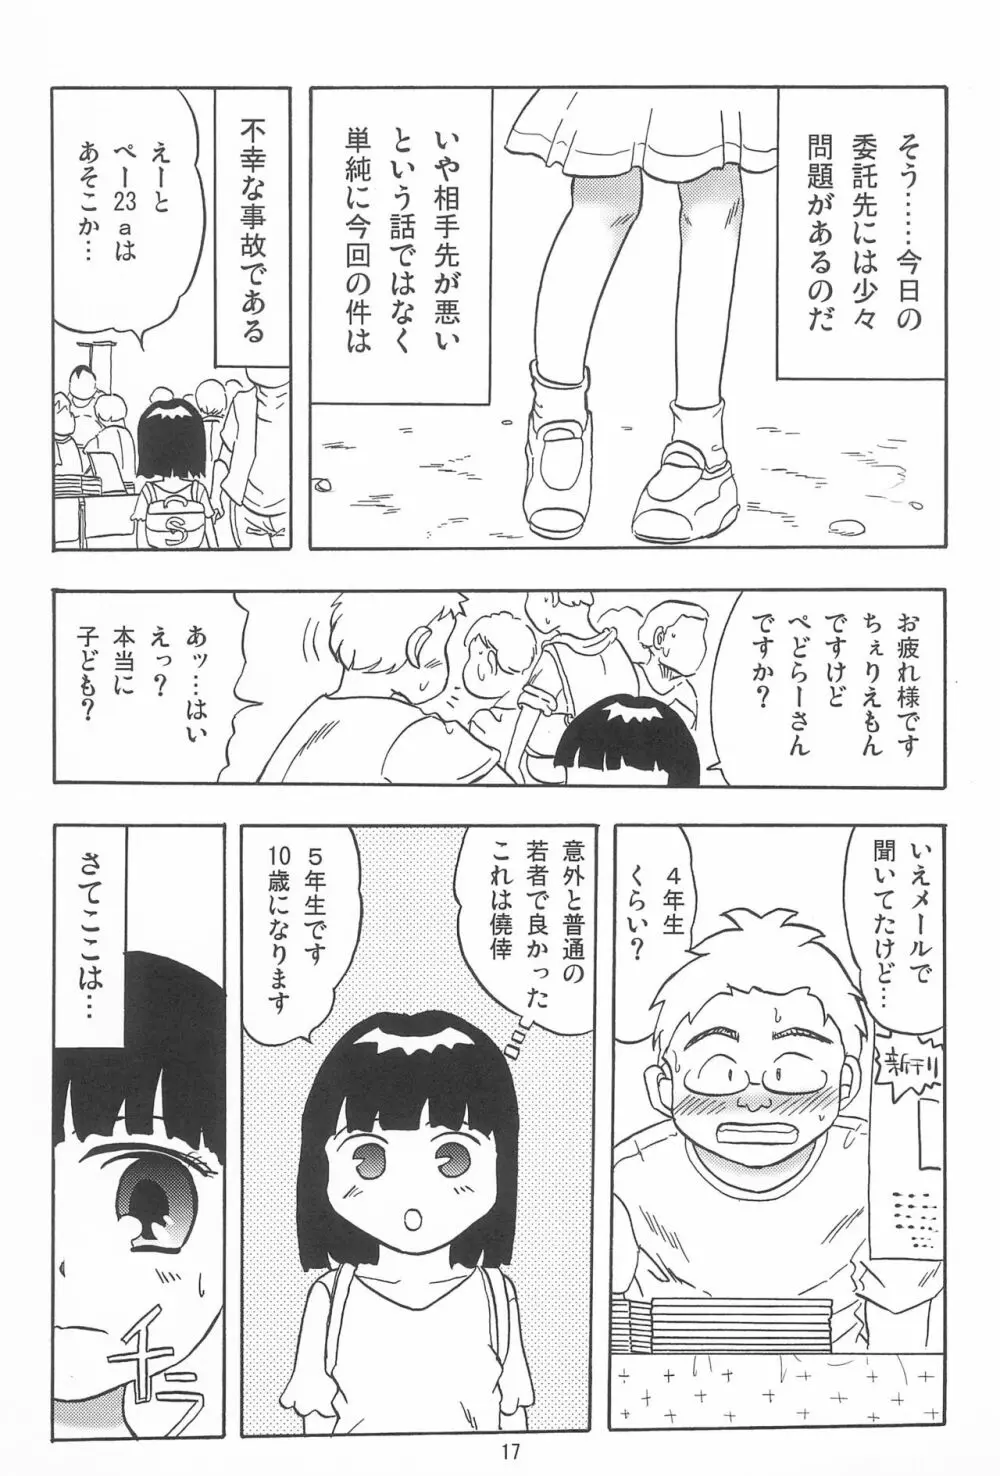 女子小学生日記11 - page17